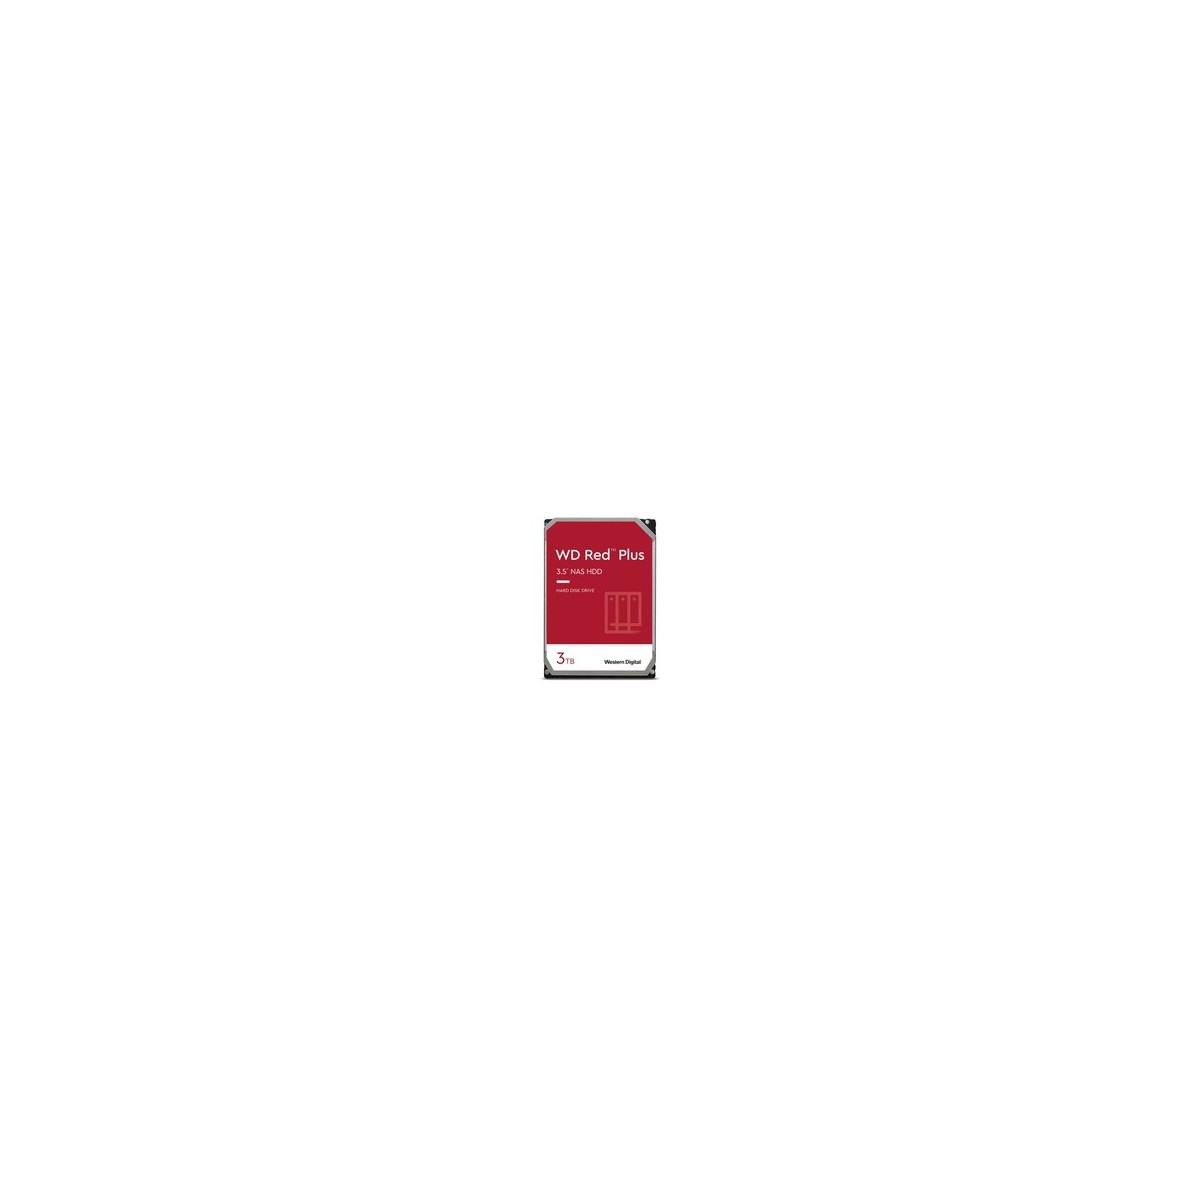 WD Red Plus WD30EFPX - 3.5 - 3000 GB - 5400 RPM